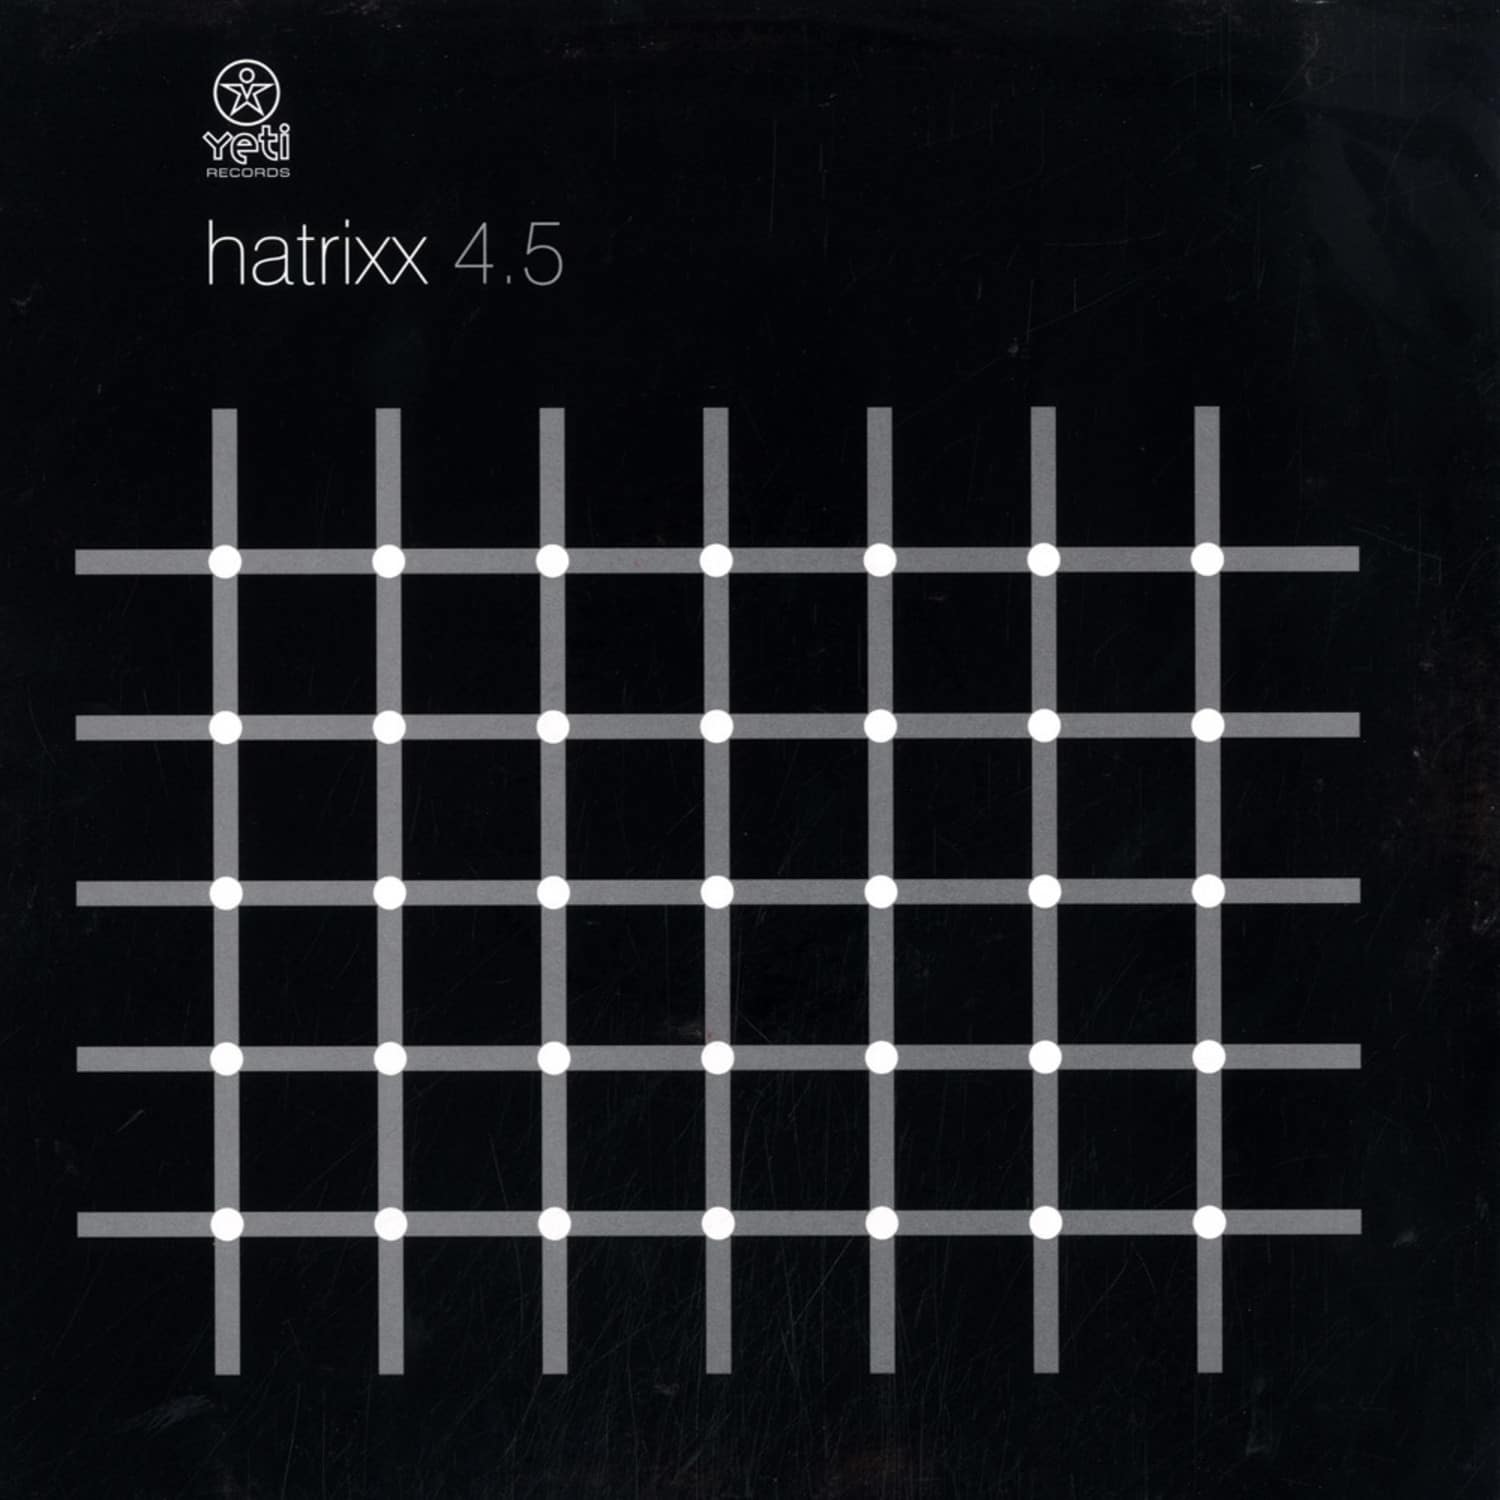 Hatrixx - 4 point 5